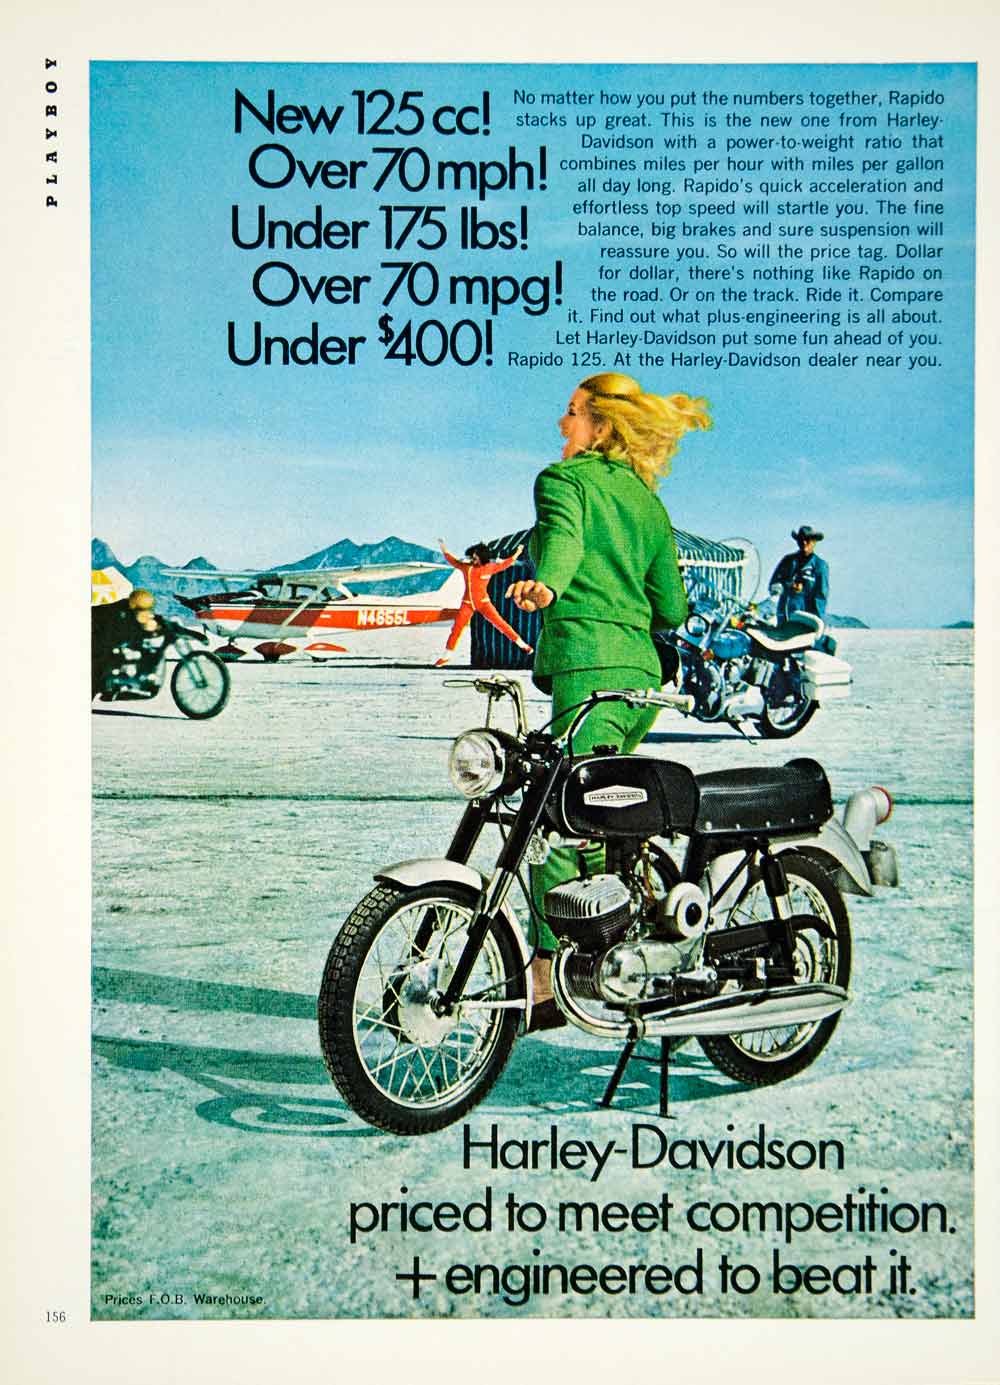 1968 Ad Vintage Harley Davidson Rapido 125cc Motorcycle Motorcycling YMMA3